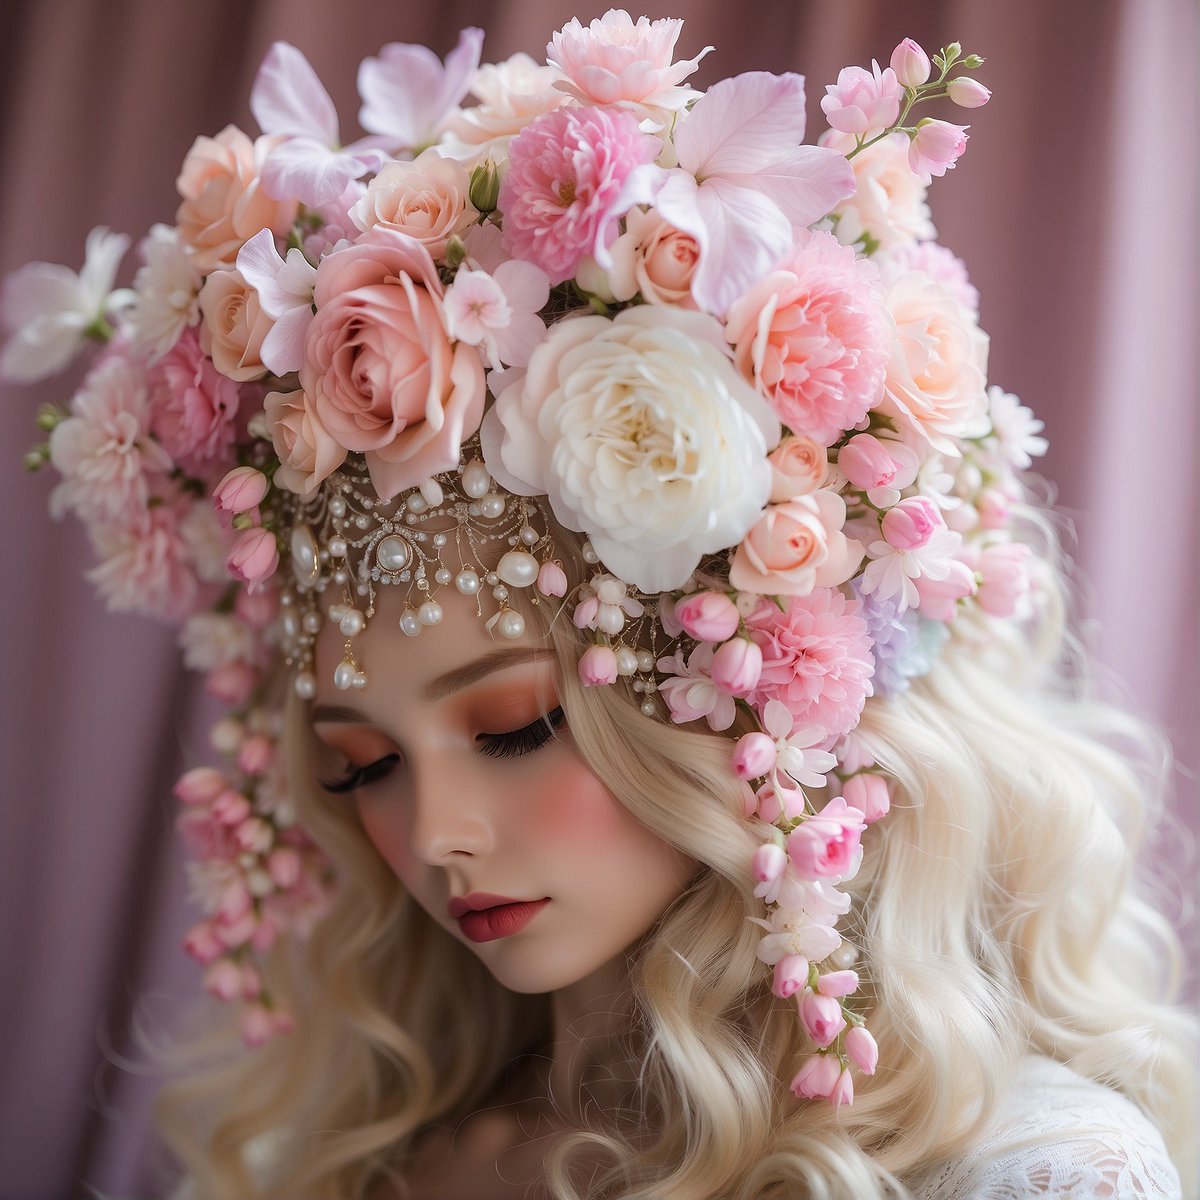 Delicate beauty ✨
#AiArtSociety #floralart #artonline #aigirls